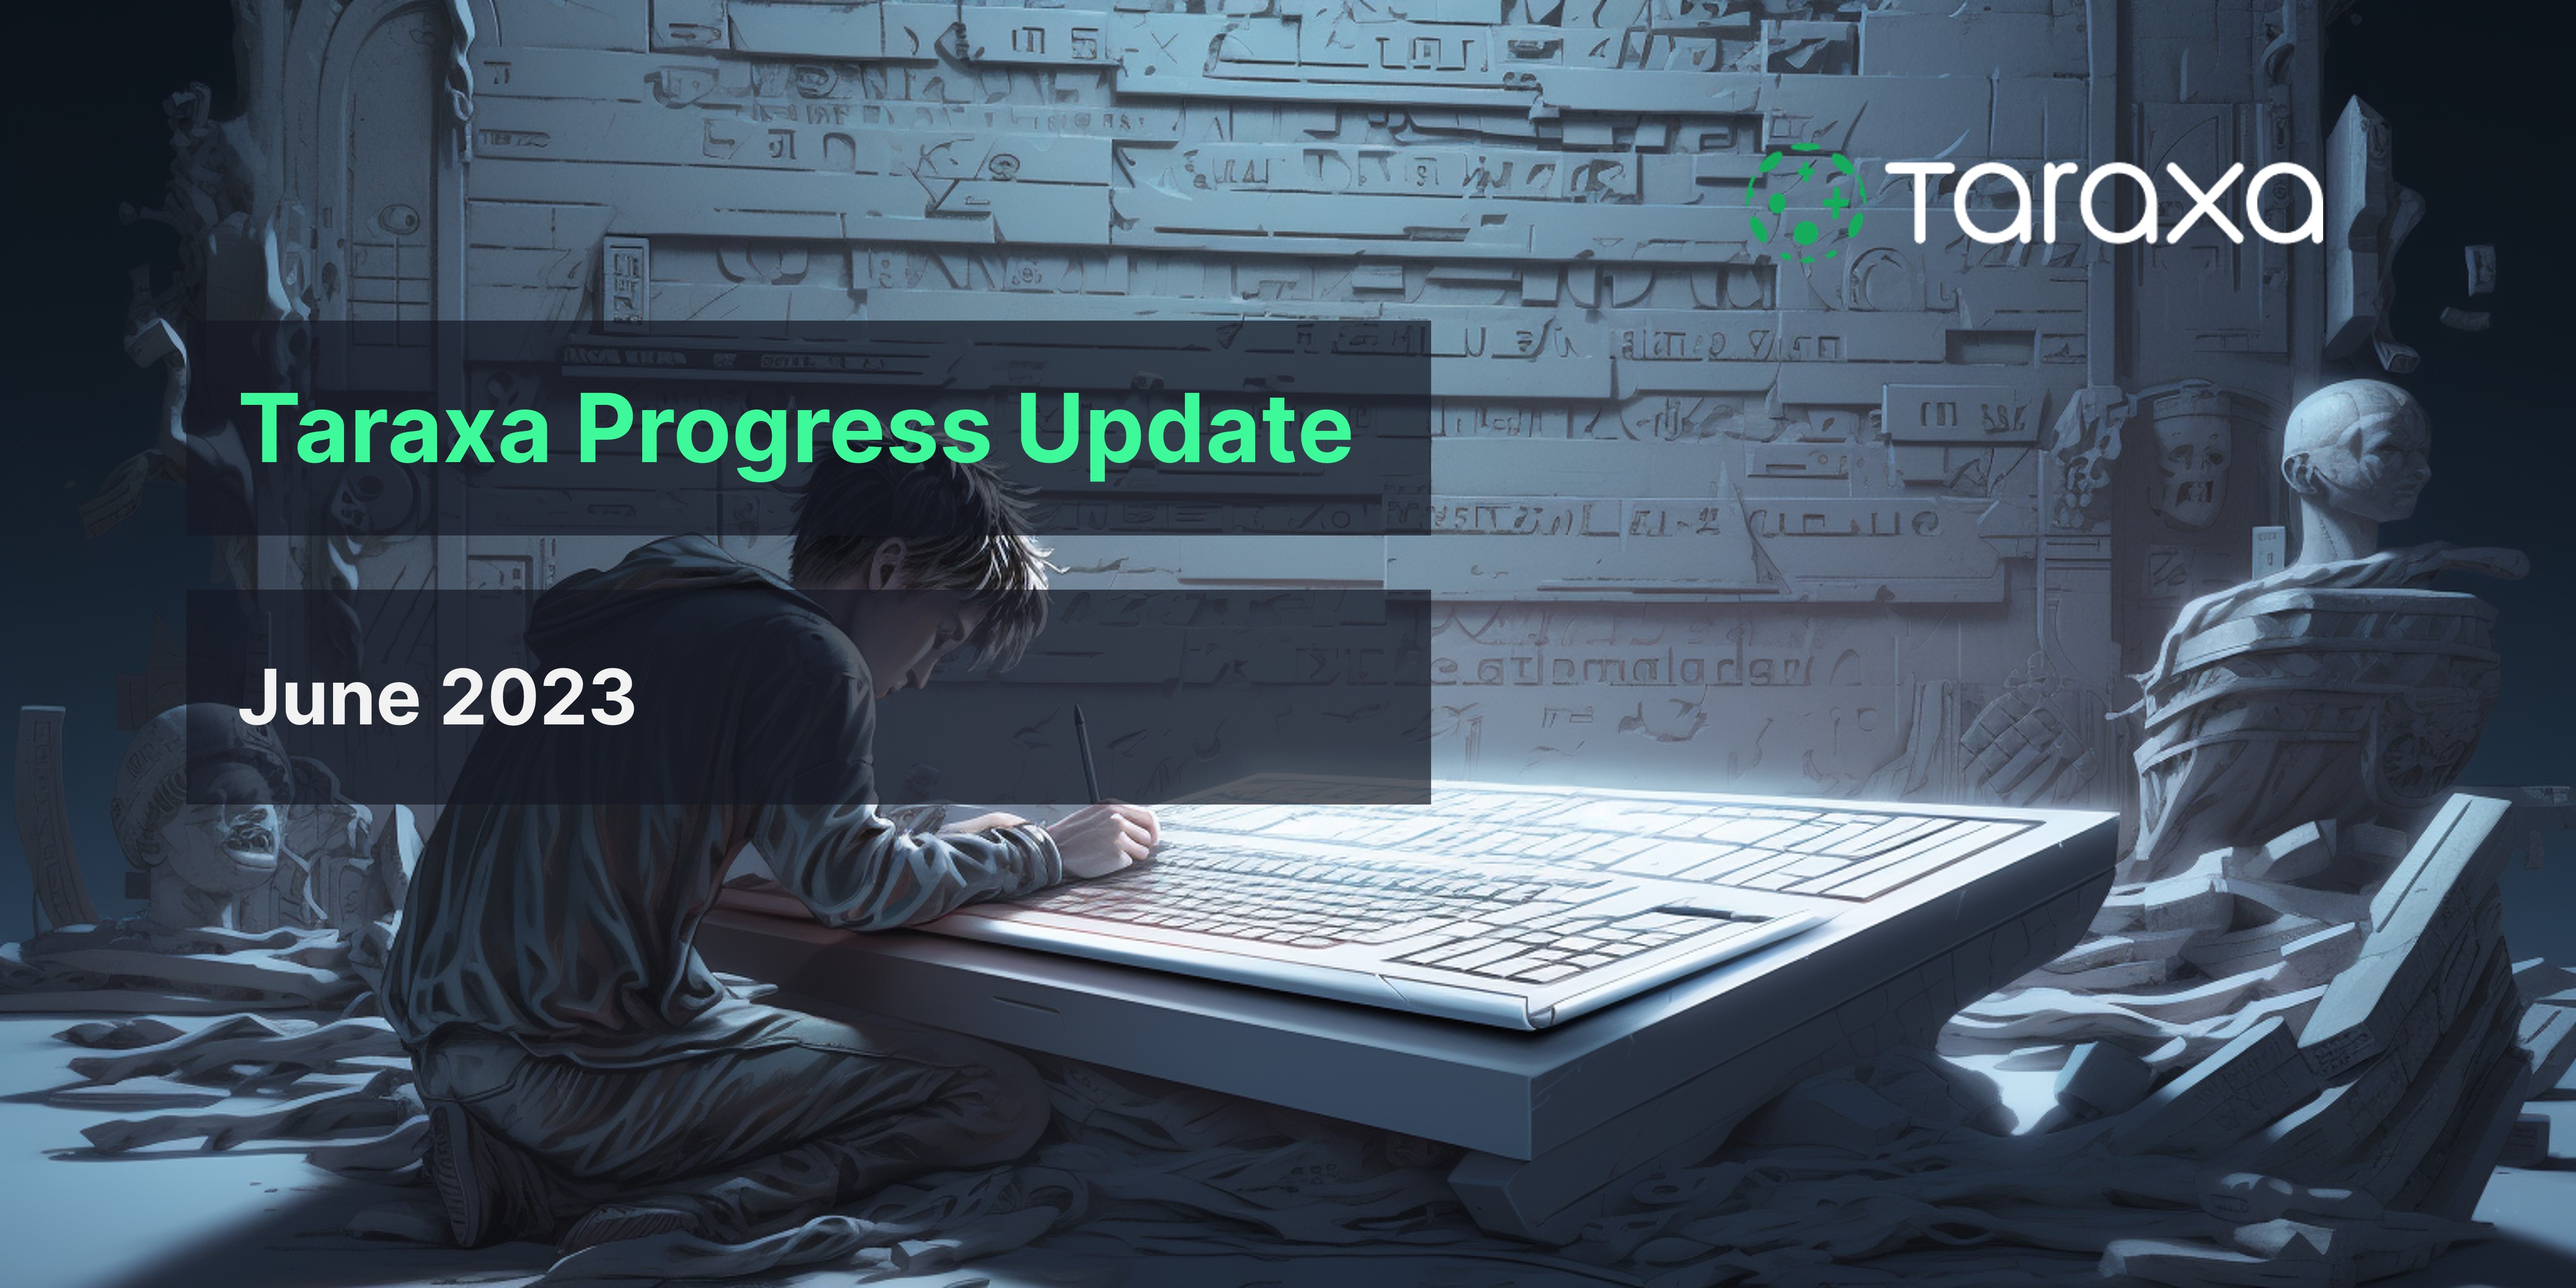 Taraxa Progress Update: June, 2023